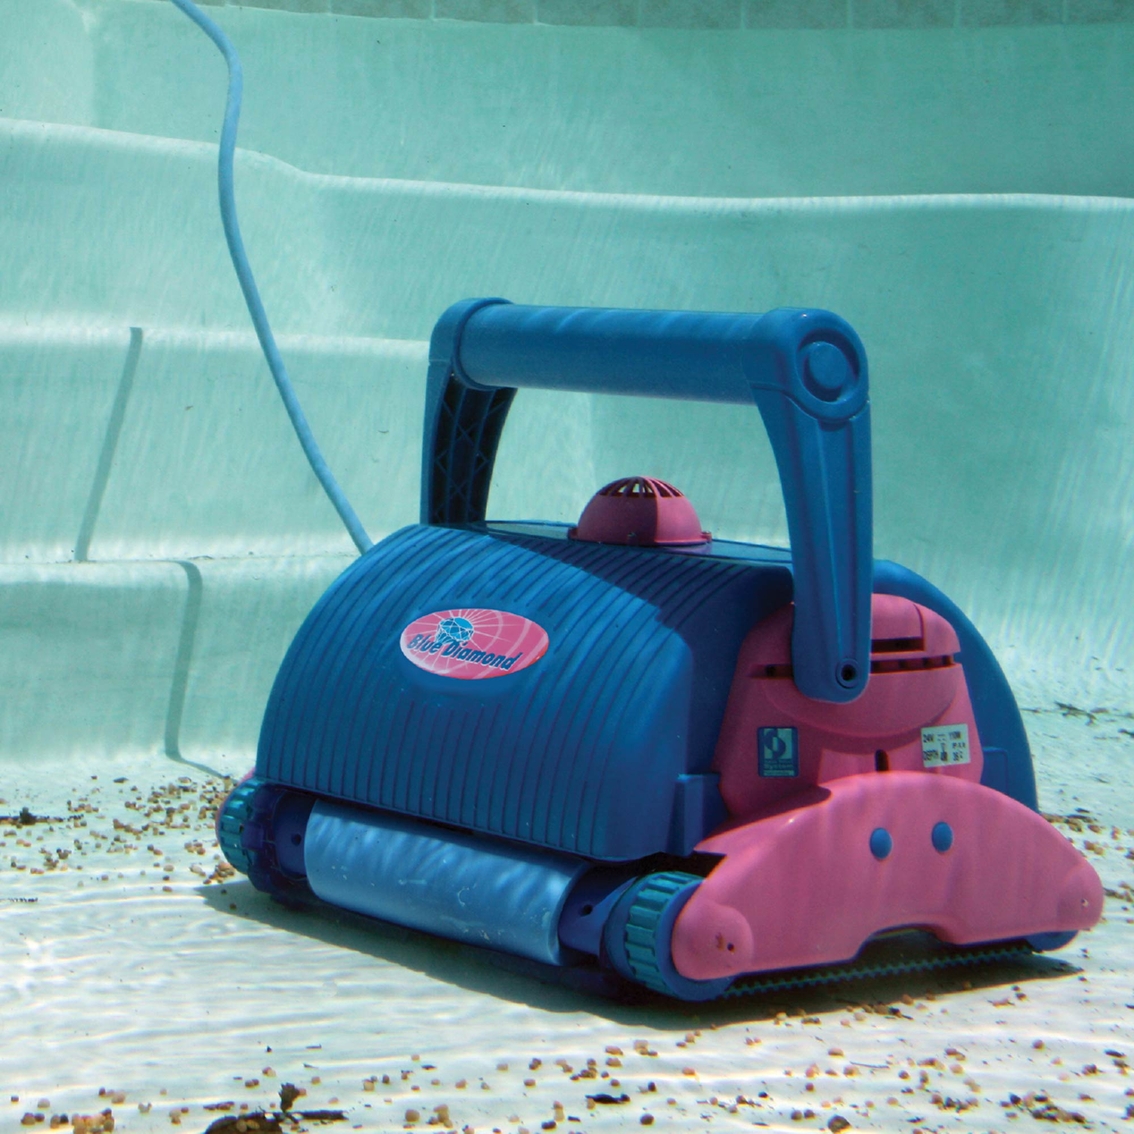 Water Tech Pool Blaster Blue Diamond Robotic Pool Cleaner - Image 3 of 3